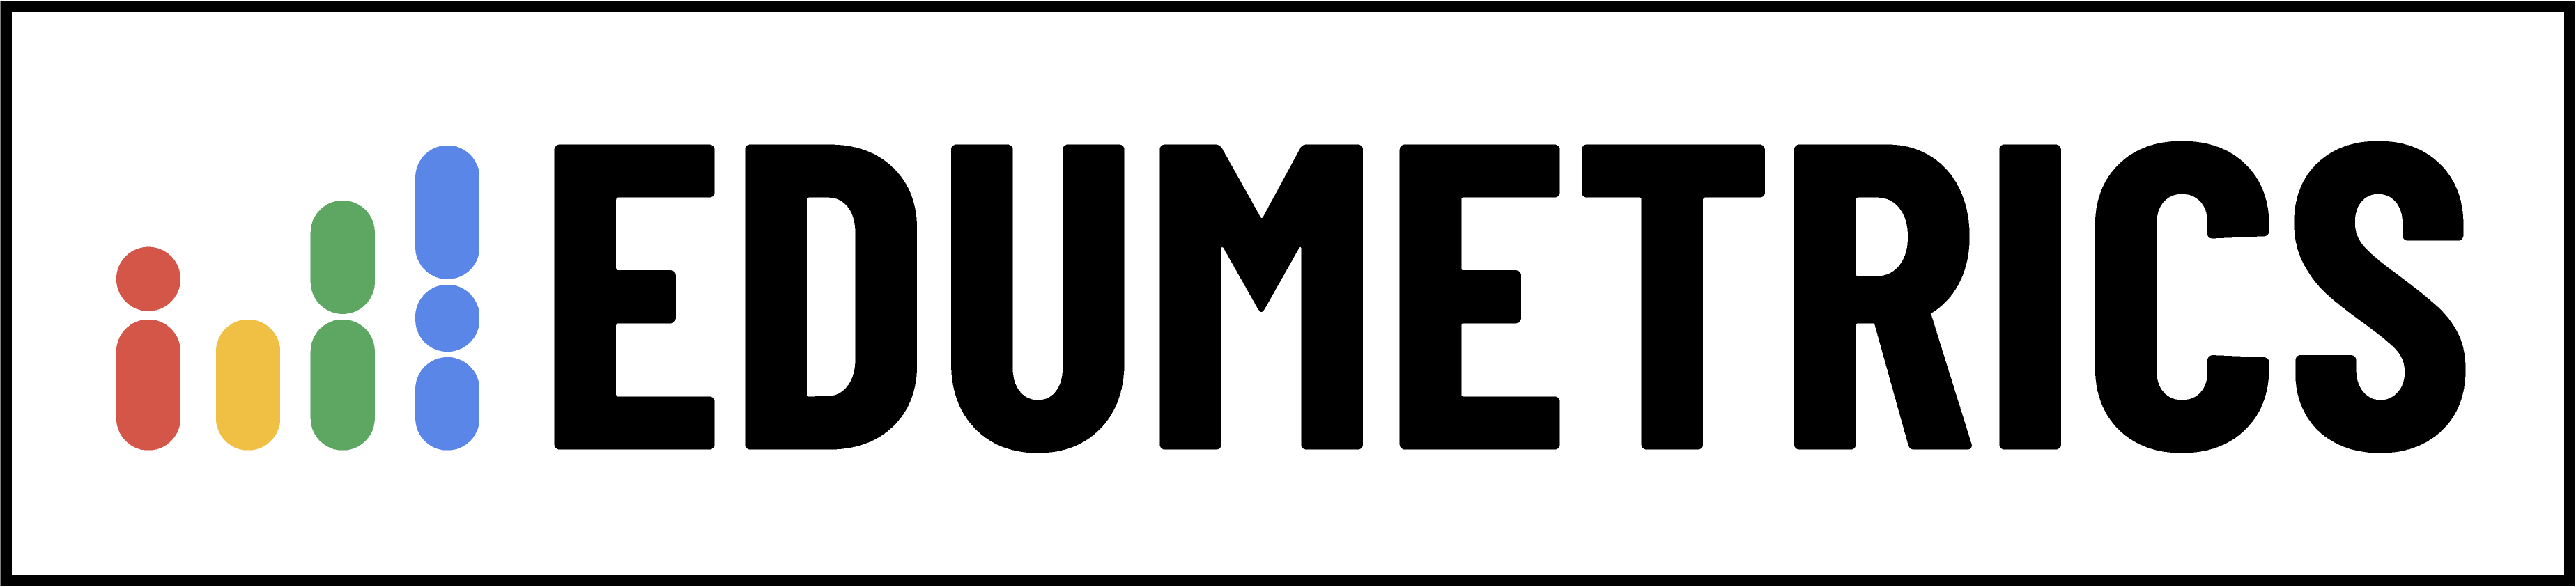 Edumetrics logo